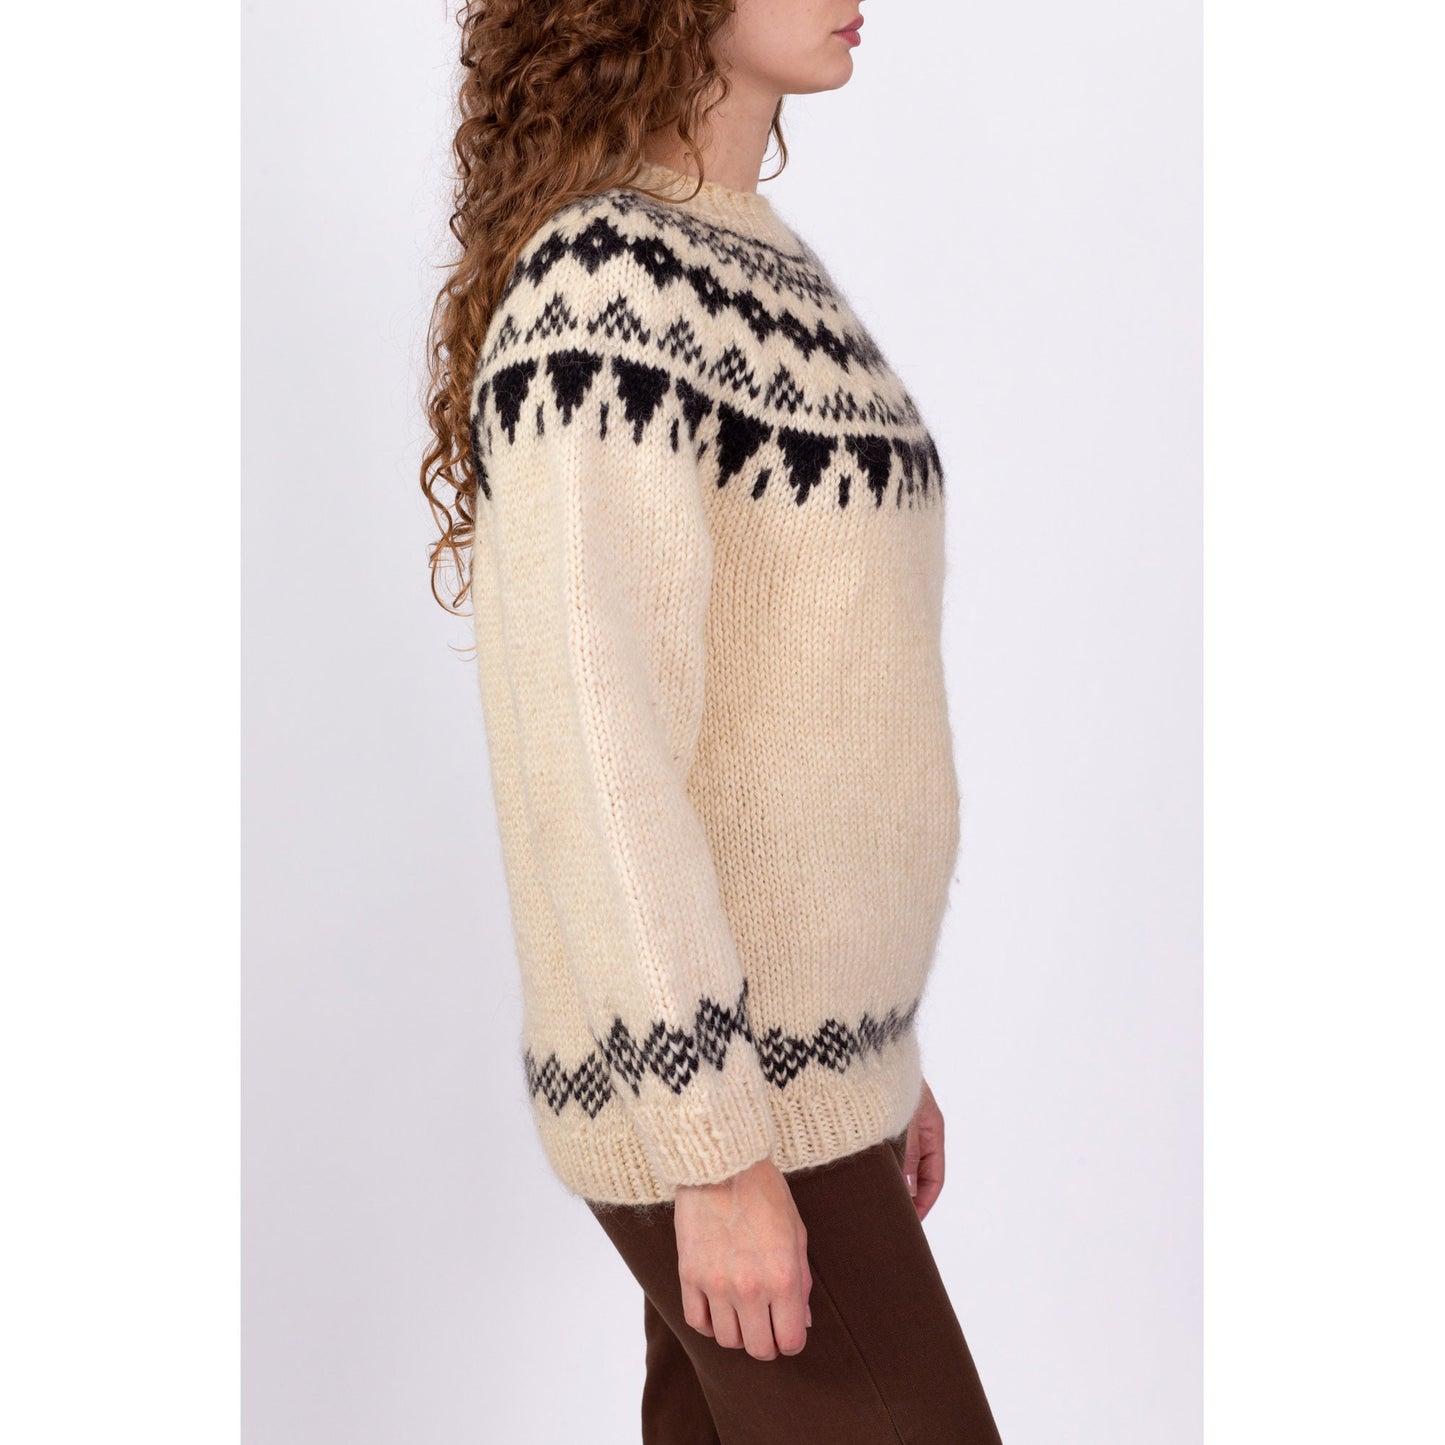 Vintage Fair Isle Wool Knit Sweater - Men's Medium, Women's Large 